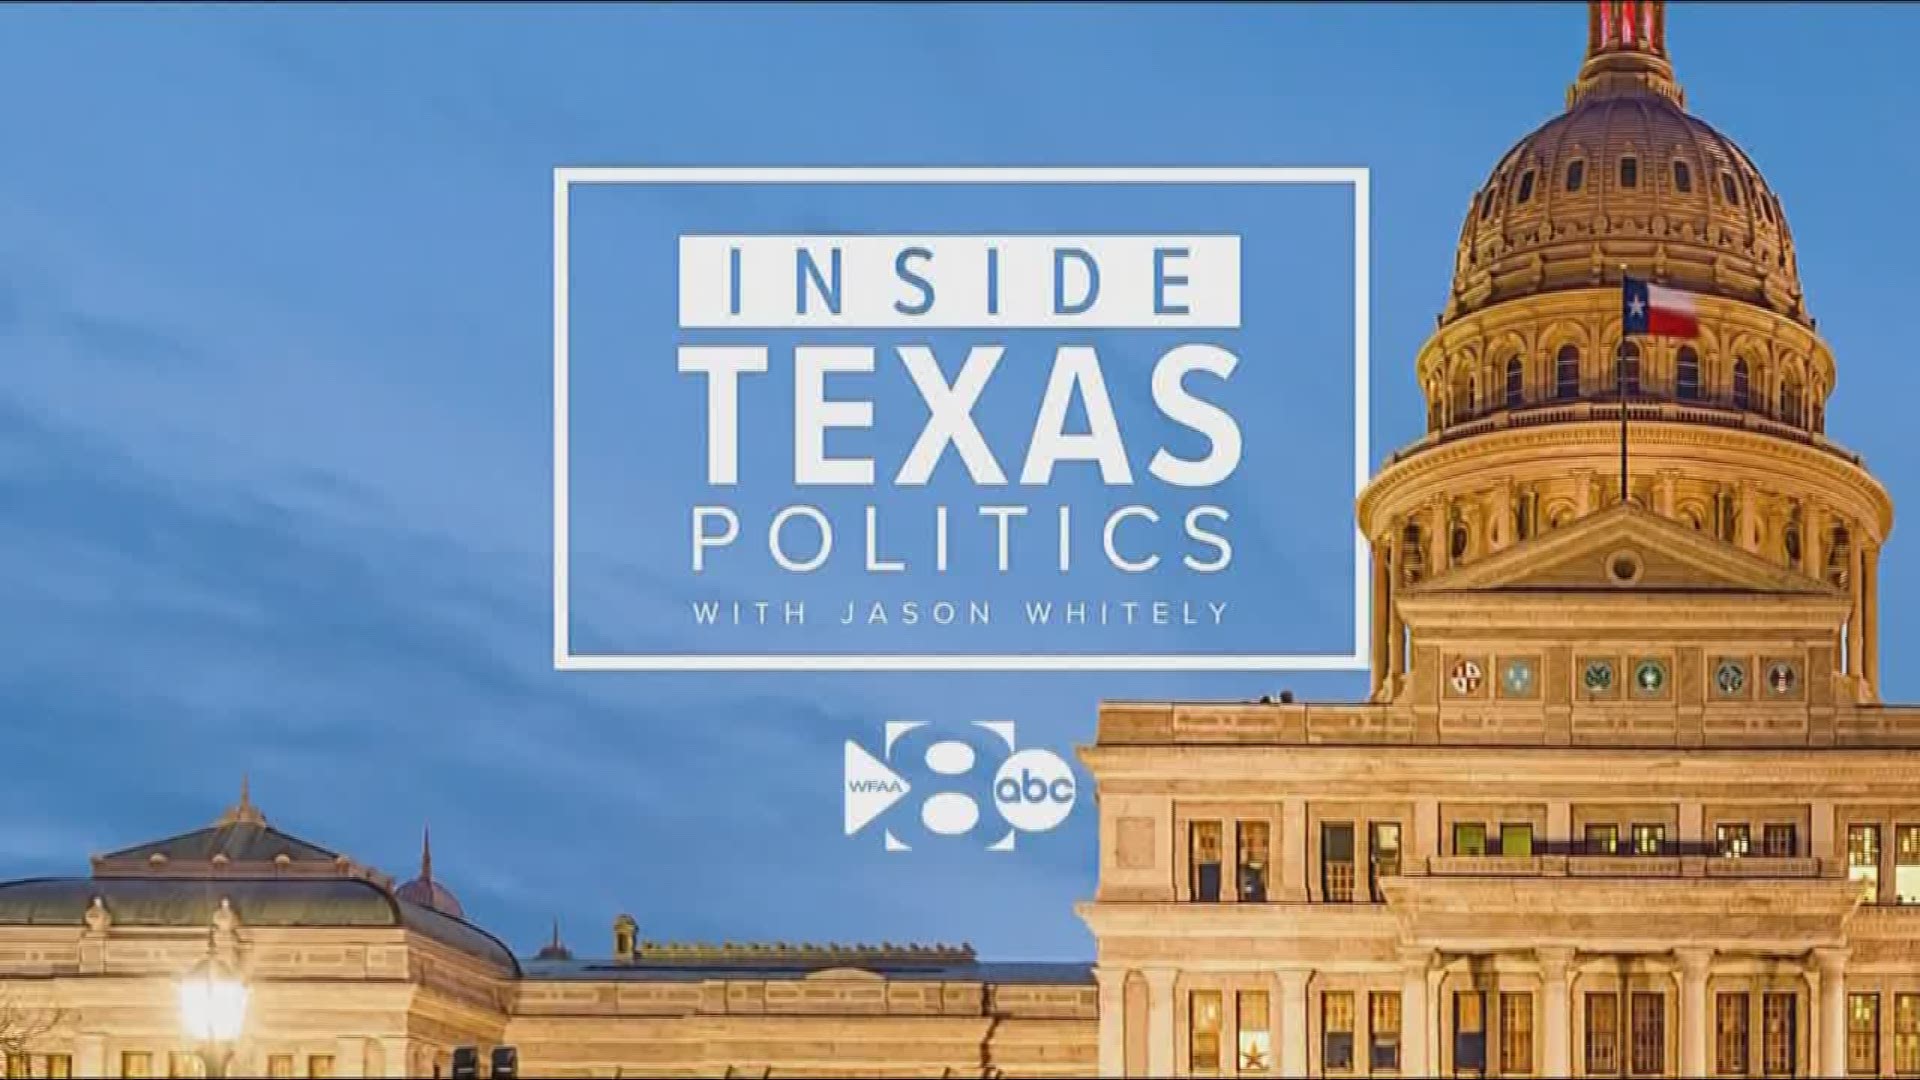 Full episode of Inside Texas Politics from Aug. 12, 2018.